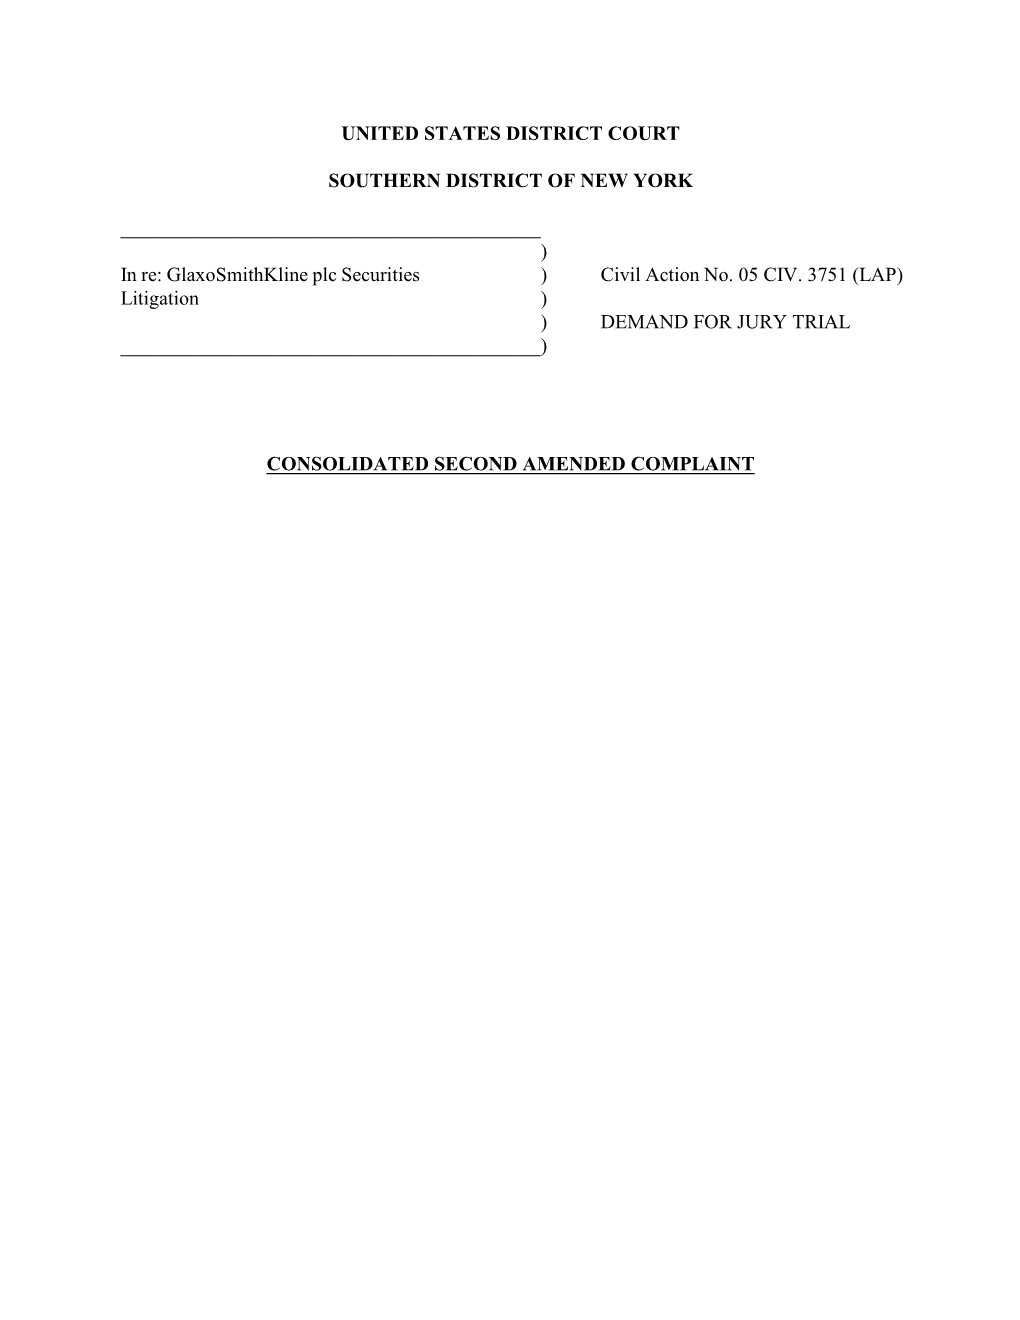 In Re: Glaxosmithkline Plc Securities Litigation 05-CV-3751